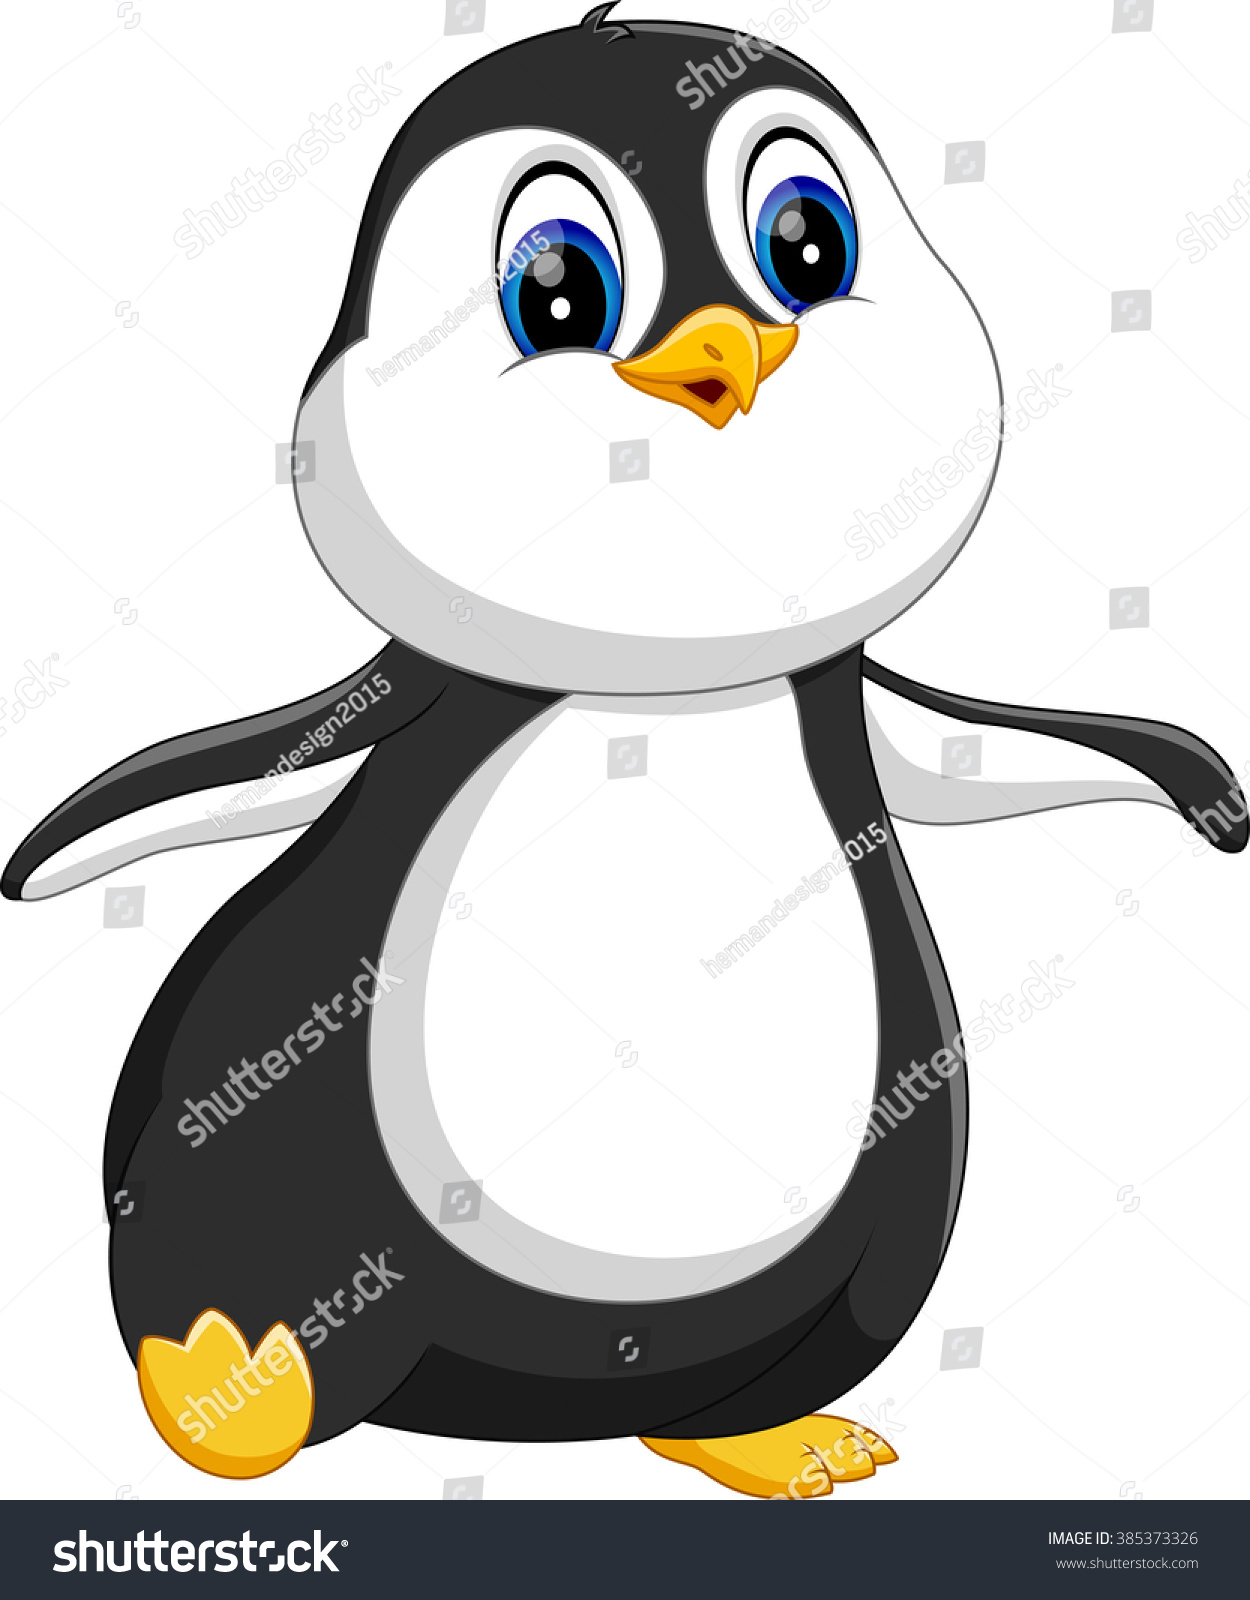 Illustration Of Cute Penguin Cartoon - 385373326 : Shutterstock